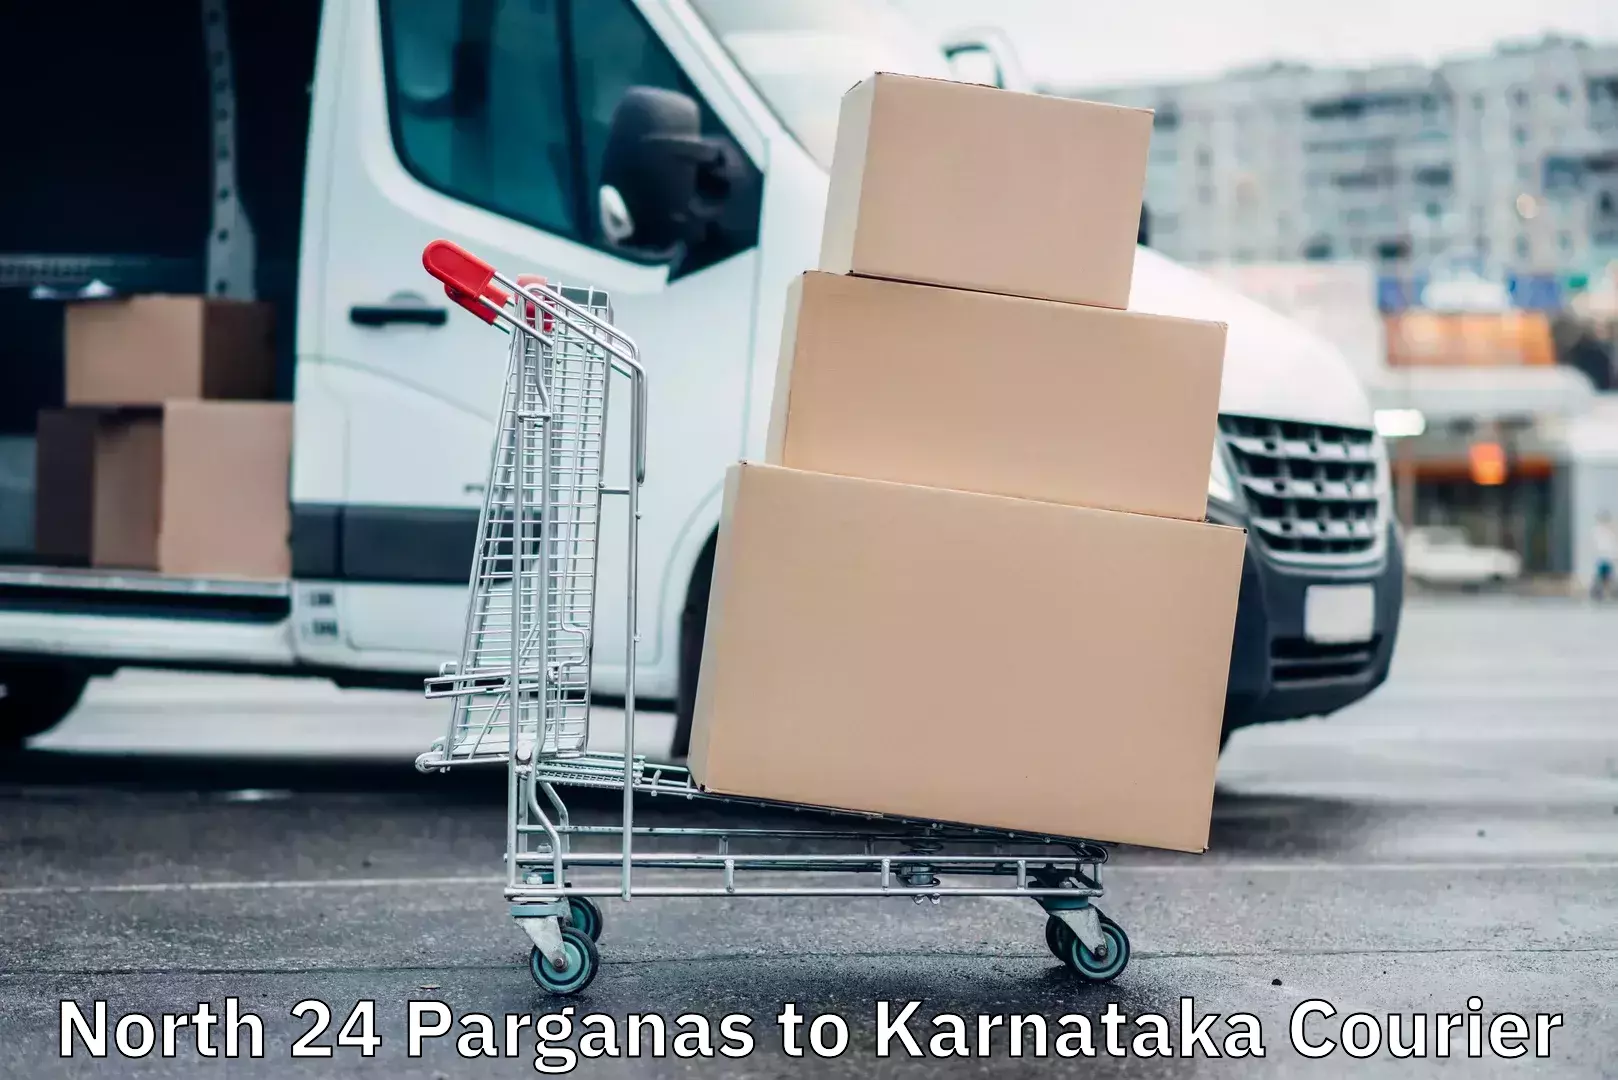 Business delivery service North 24 Parganas to Karnataka